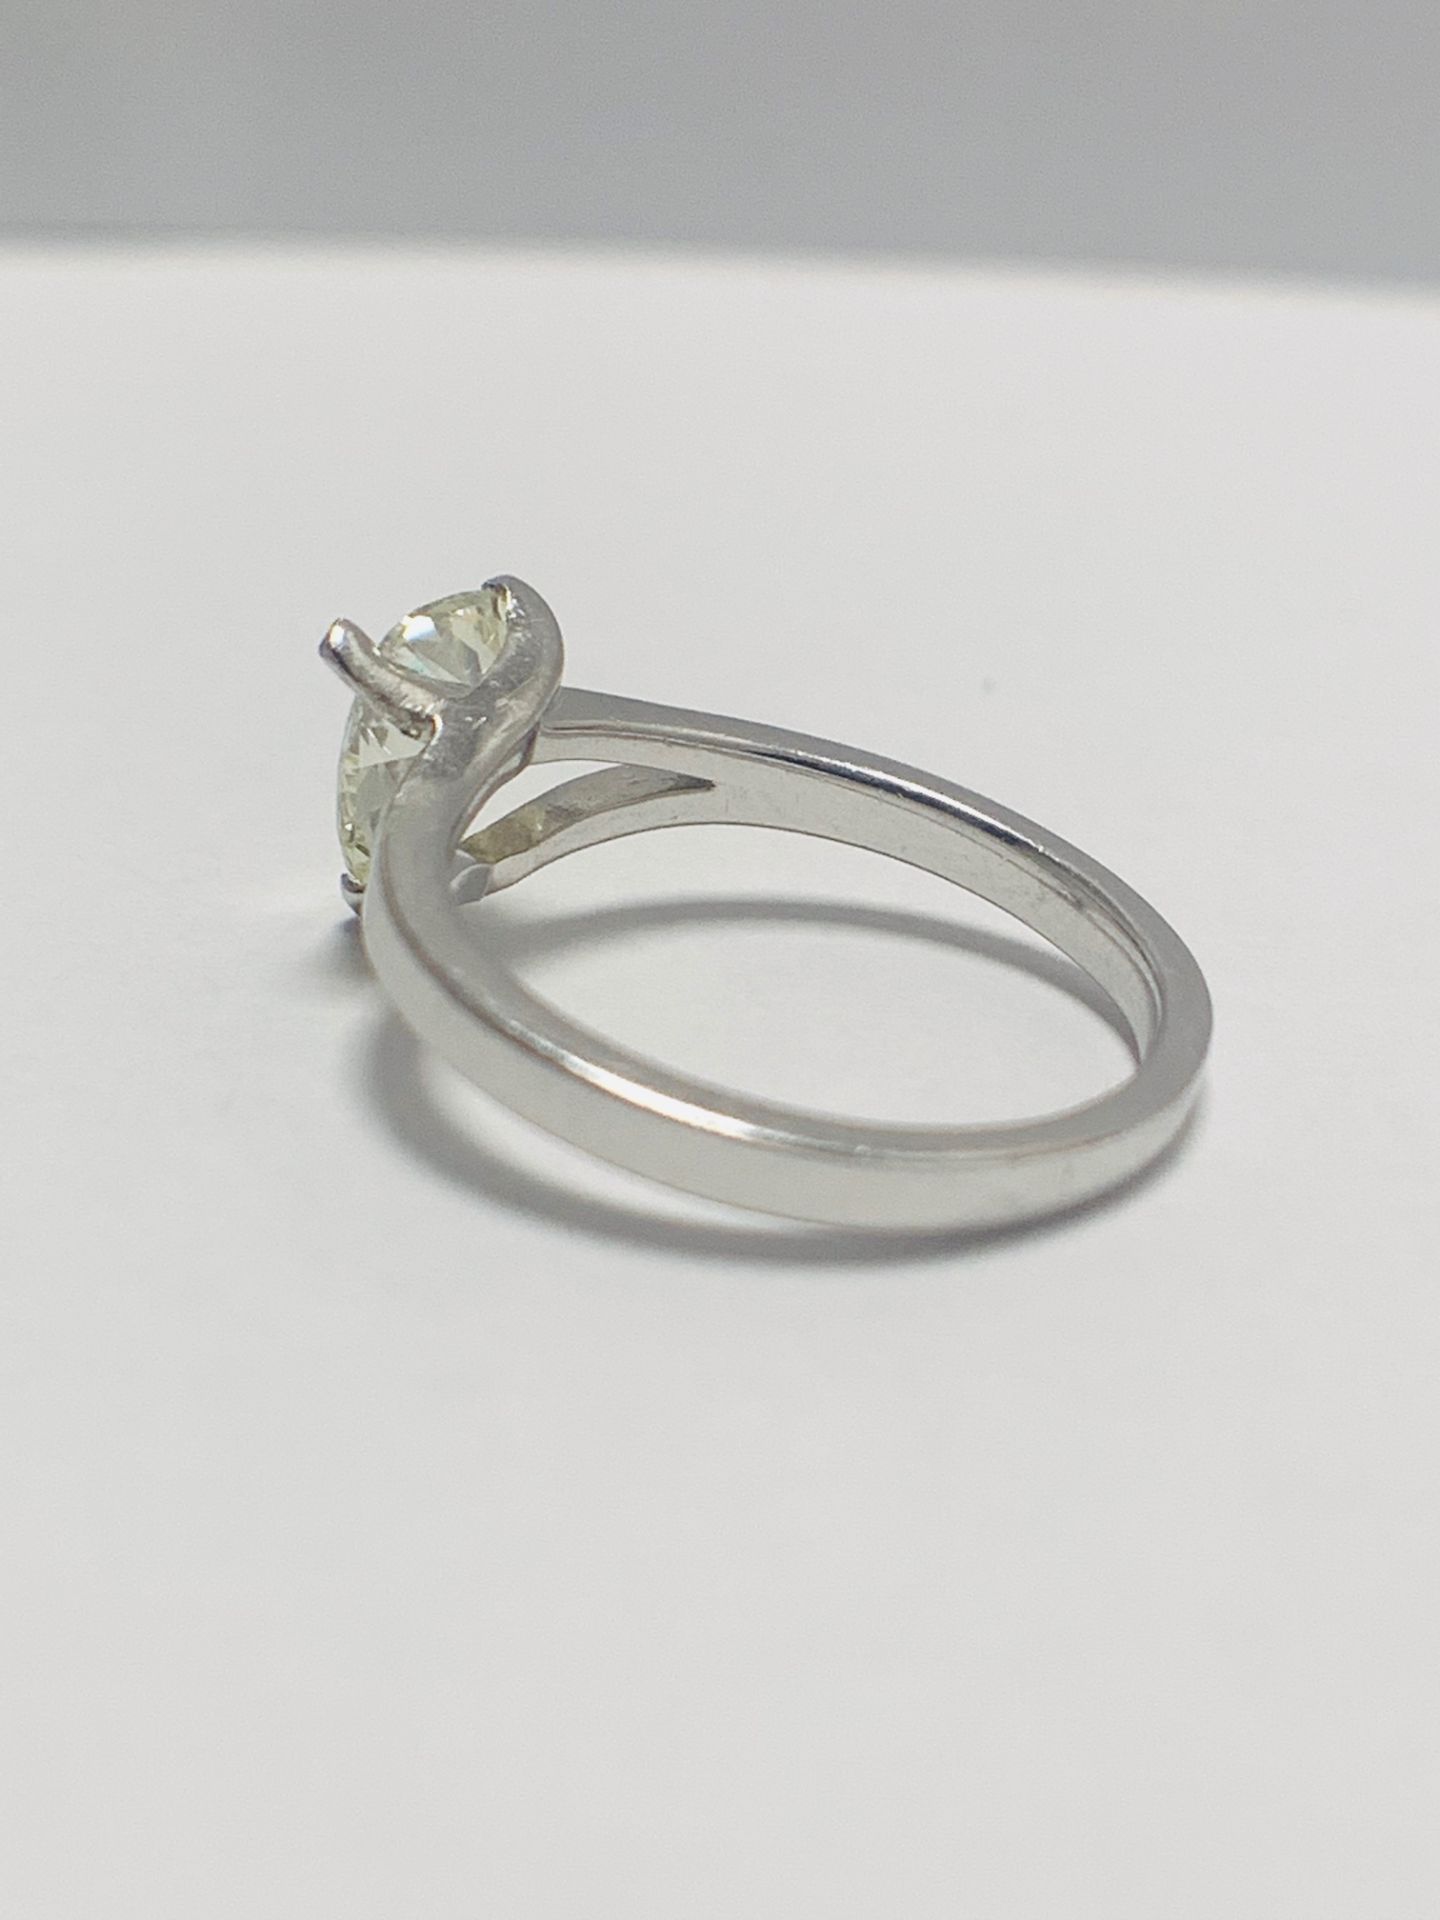 1Ct Pearshape Diamond Platinum Solitaire Ring. - Image 4 of 9